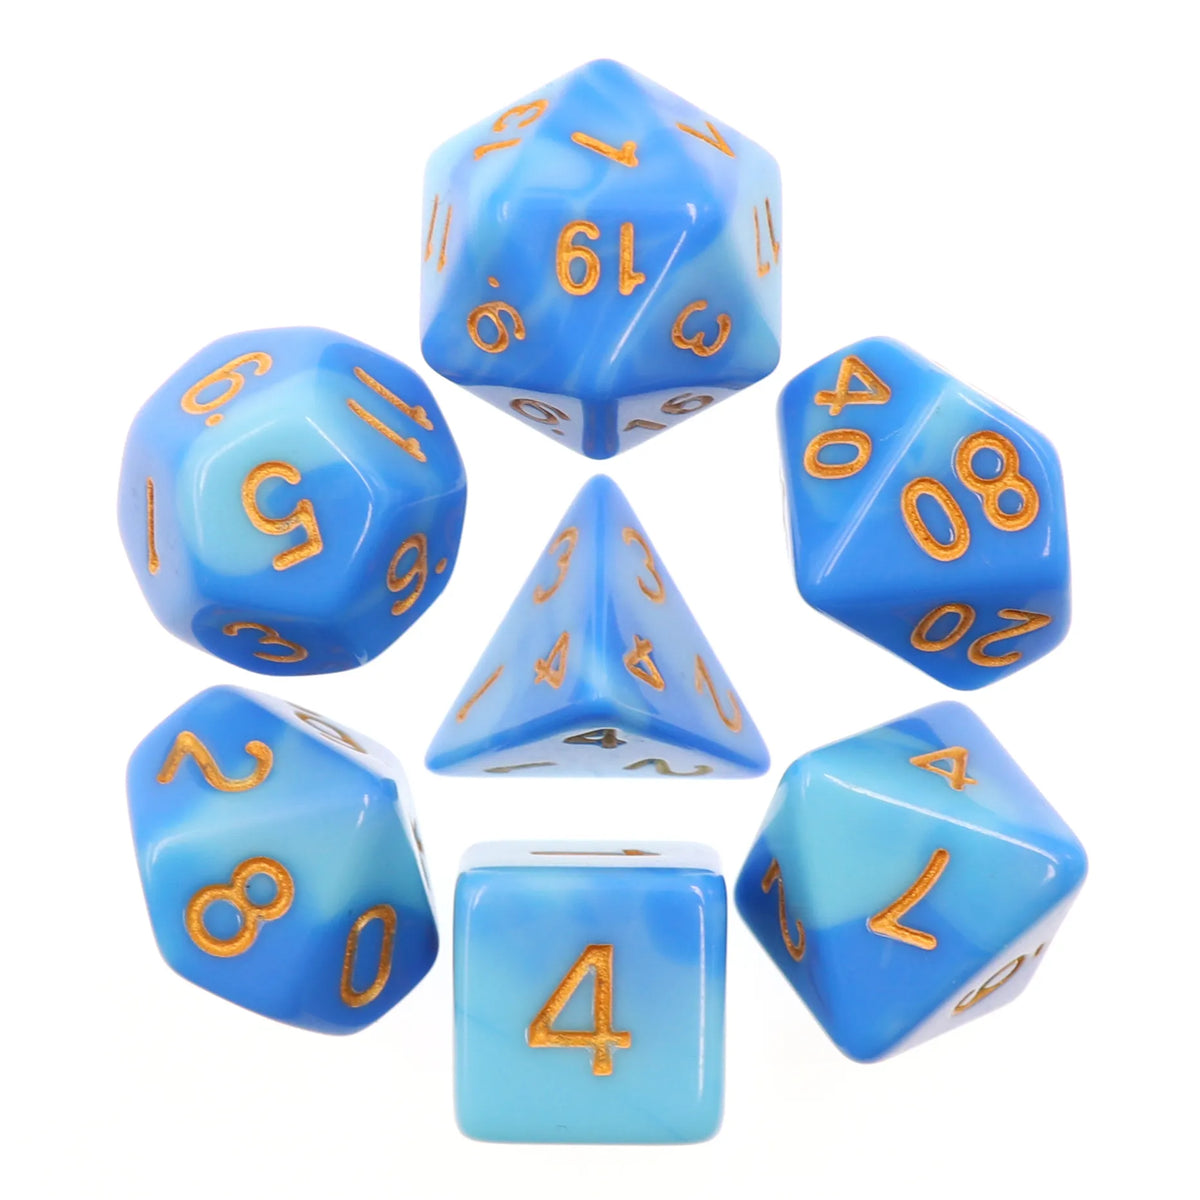 (Sky blue+Blue) 
Blend color dice